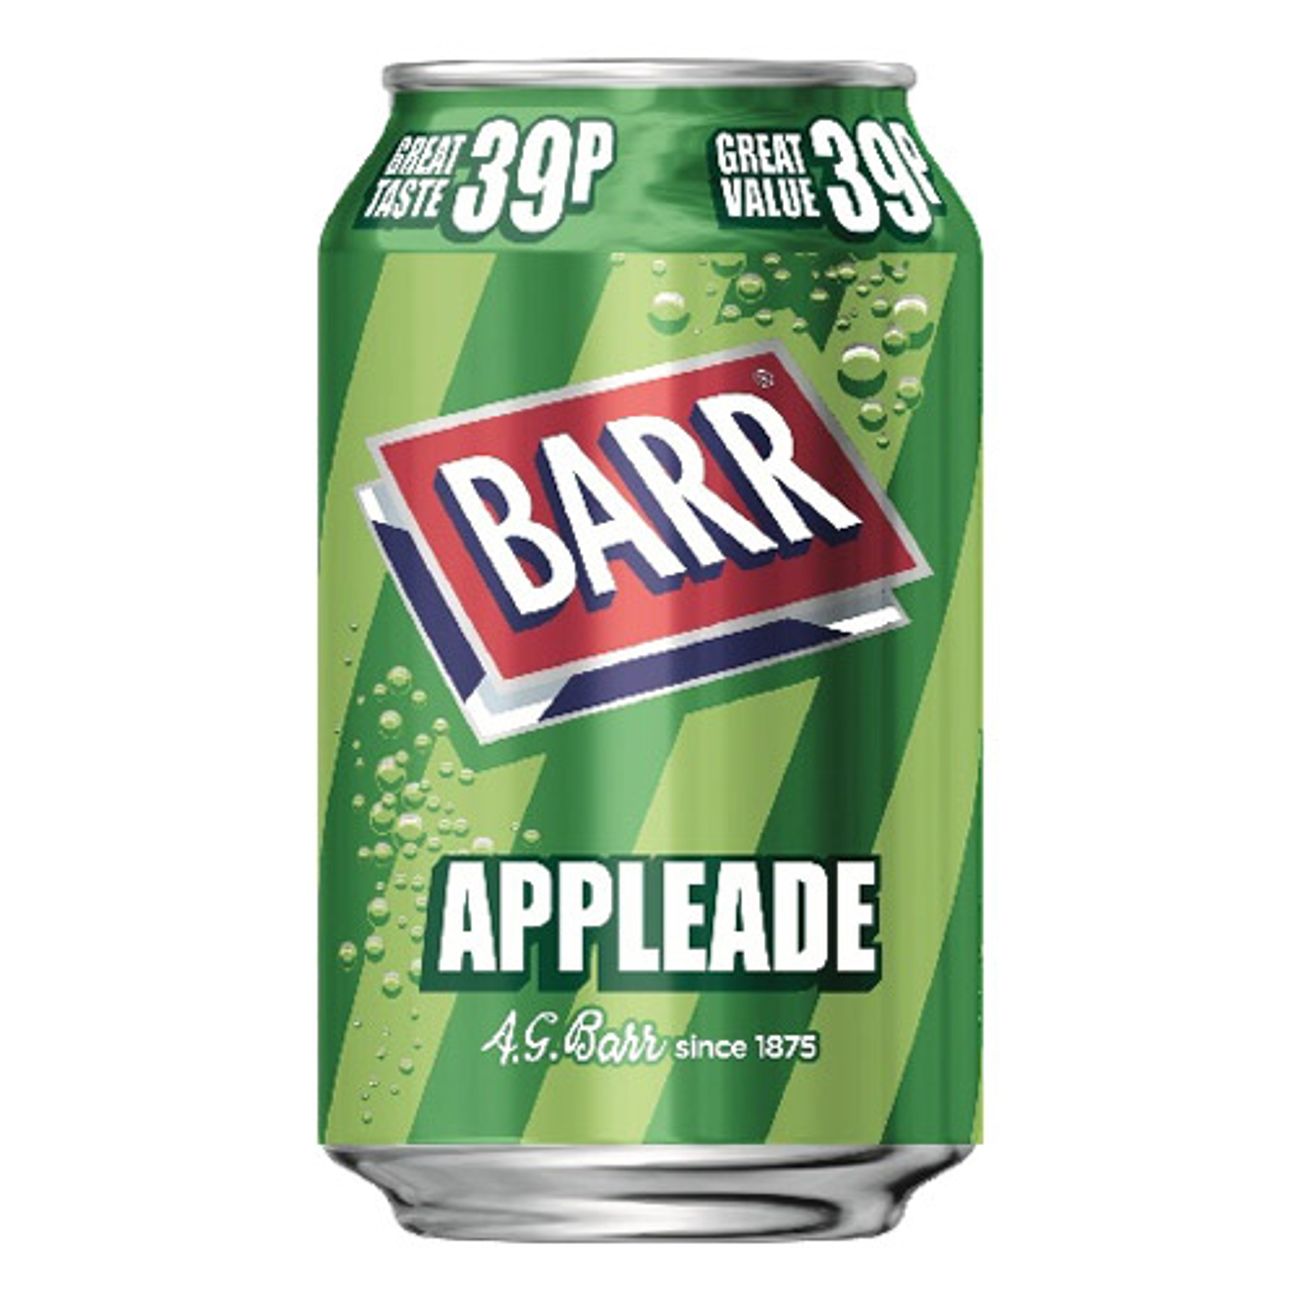 barr-appleade-1